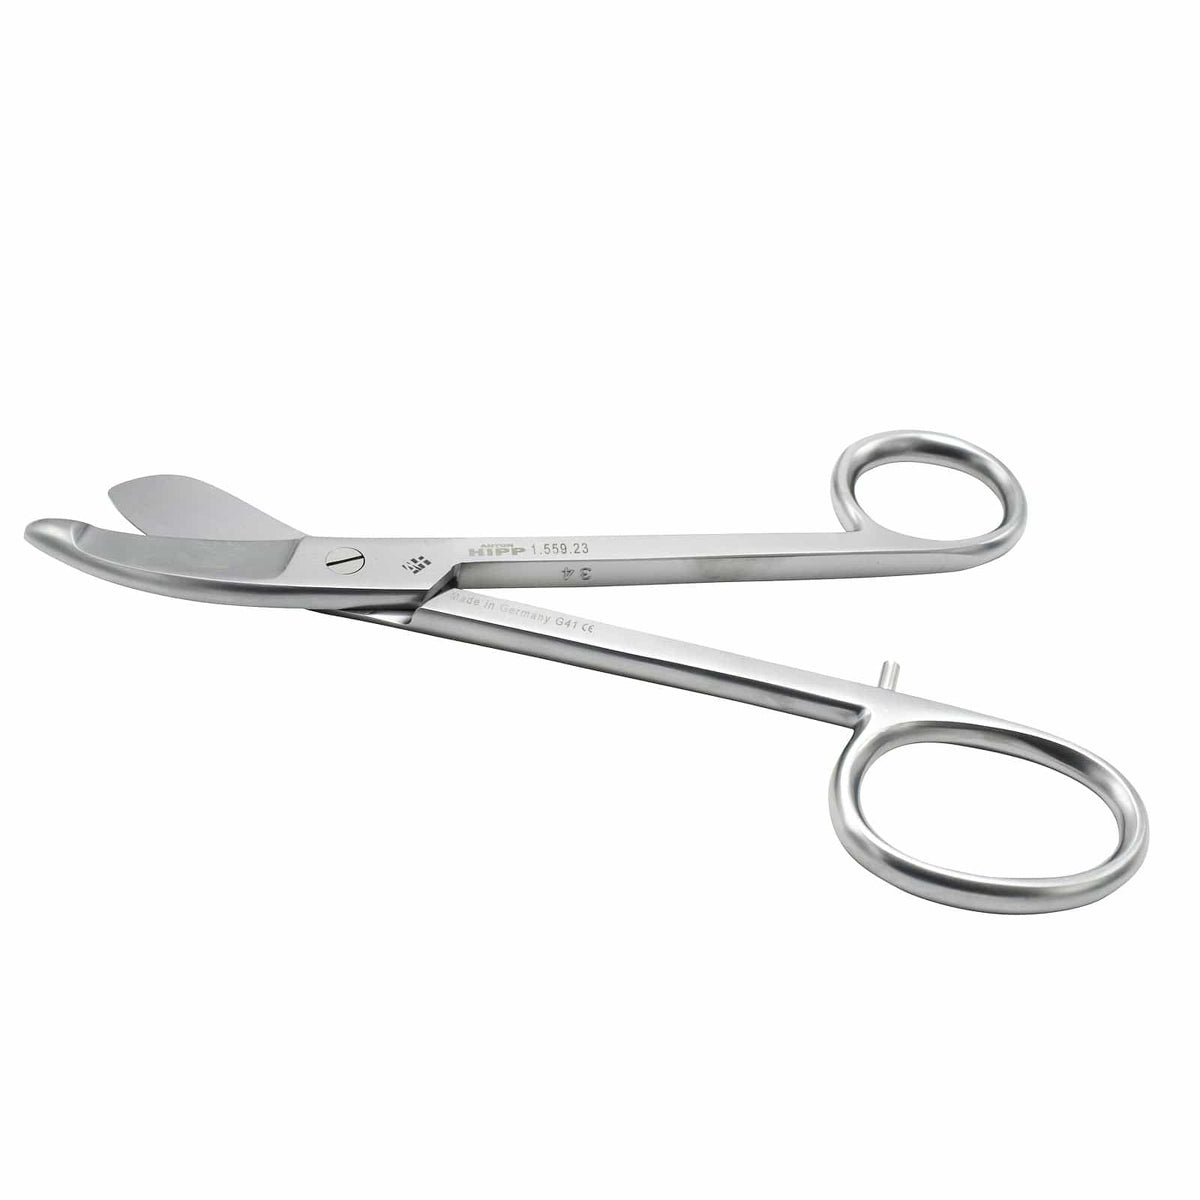 Hipp Surgical Instruments 24cm / Smooth Hipp Bruns Plaster Scissors